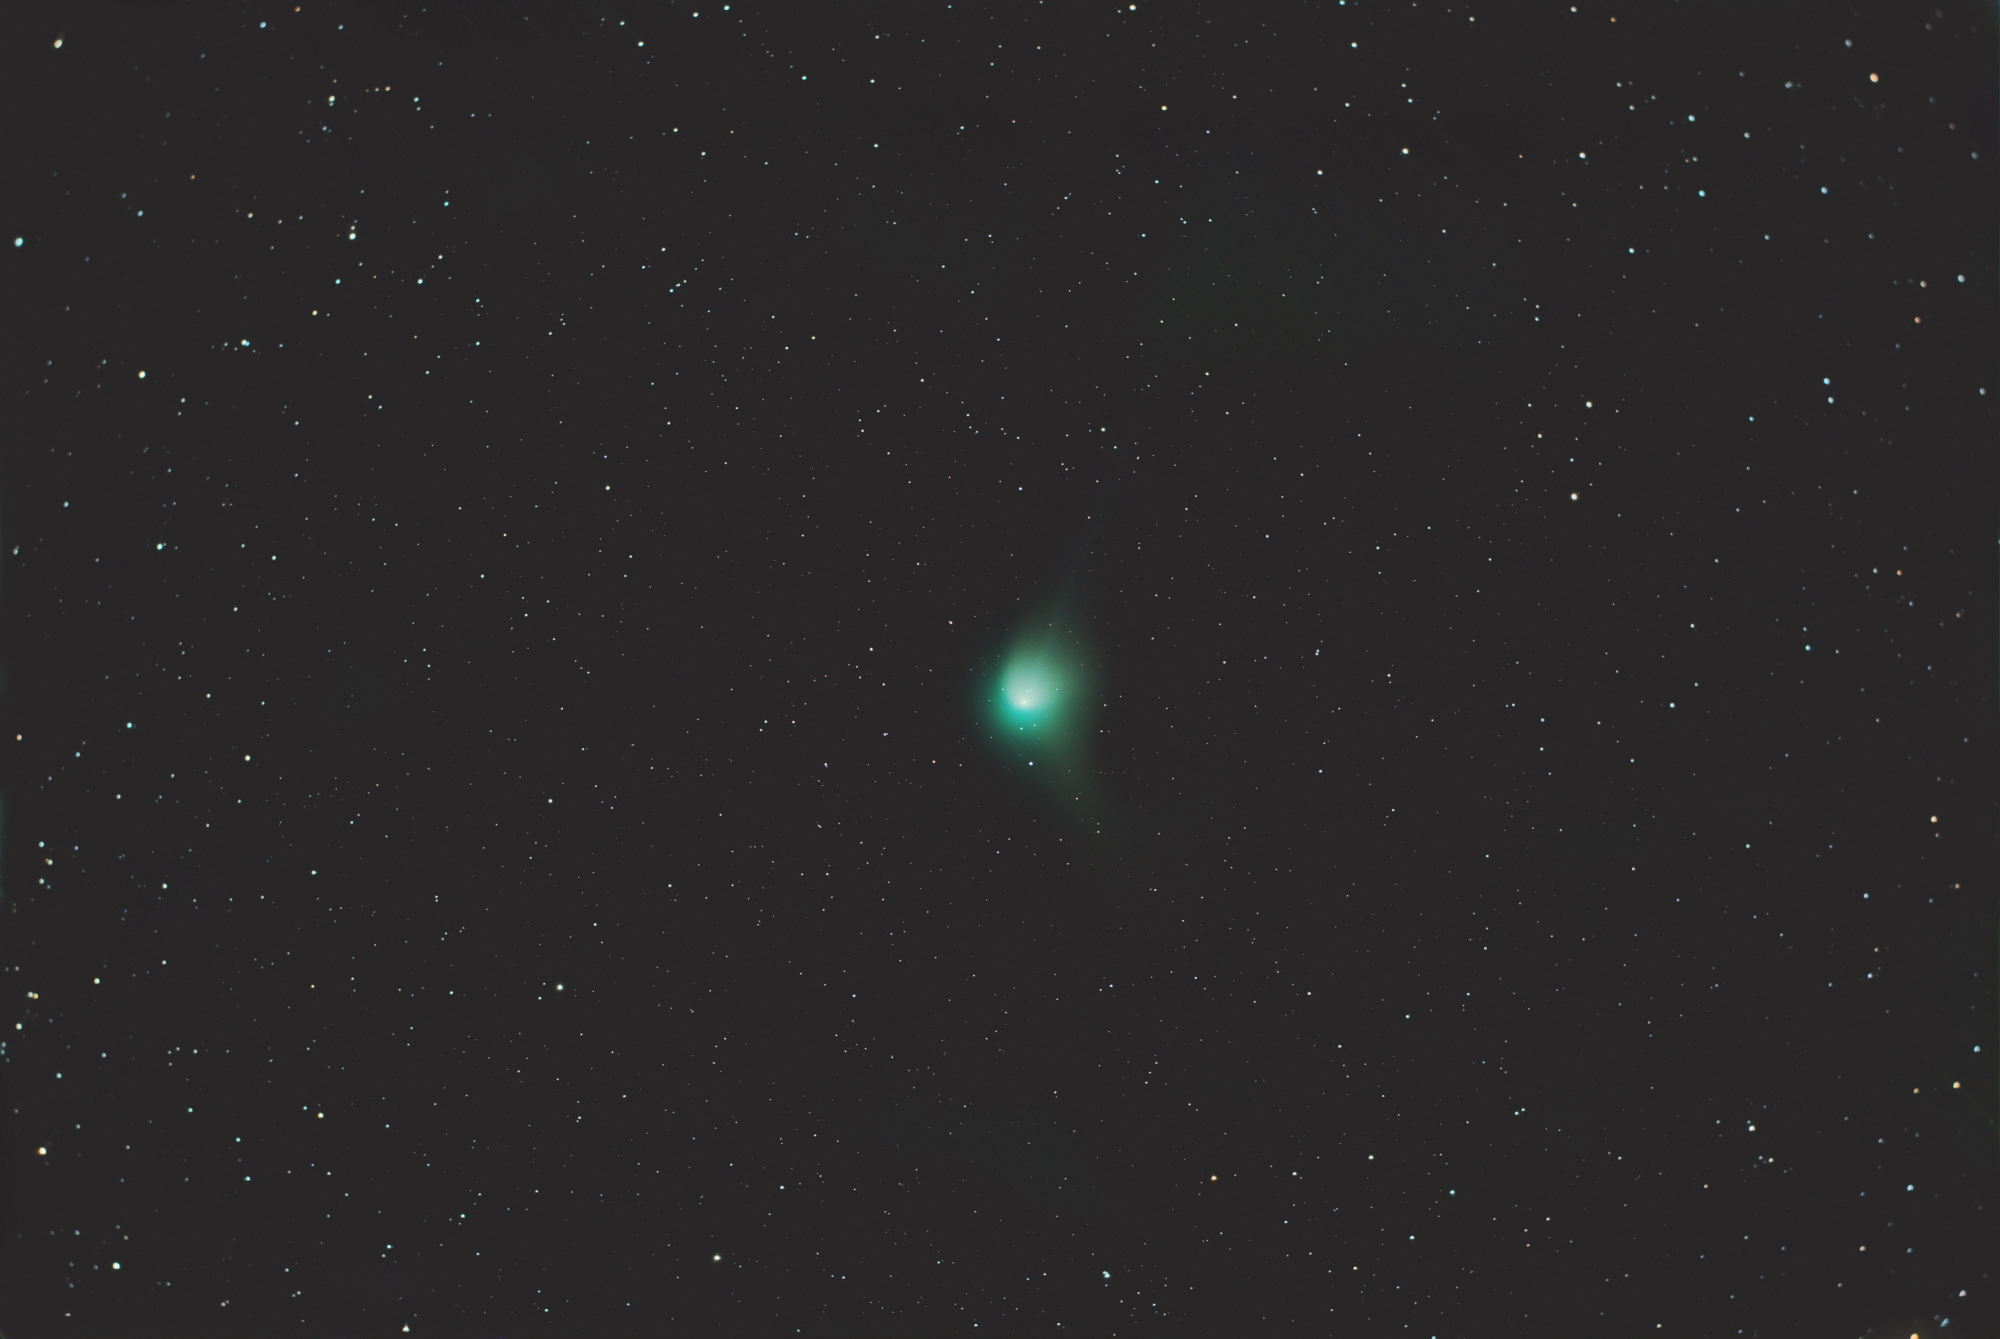 etoile_et_comete.thumb.jpg.2b1a0ebc49498afedcb64e482f5670fa.jpg